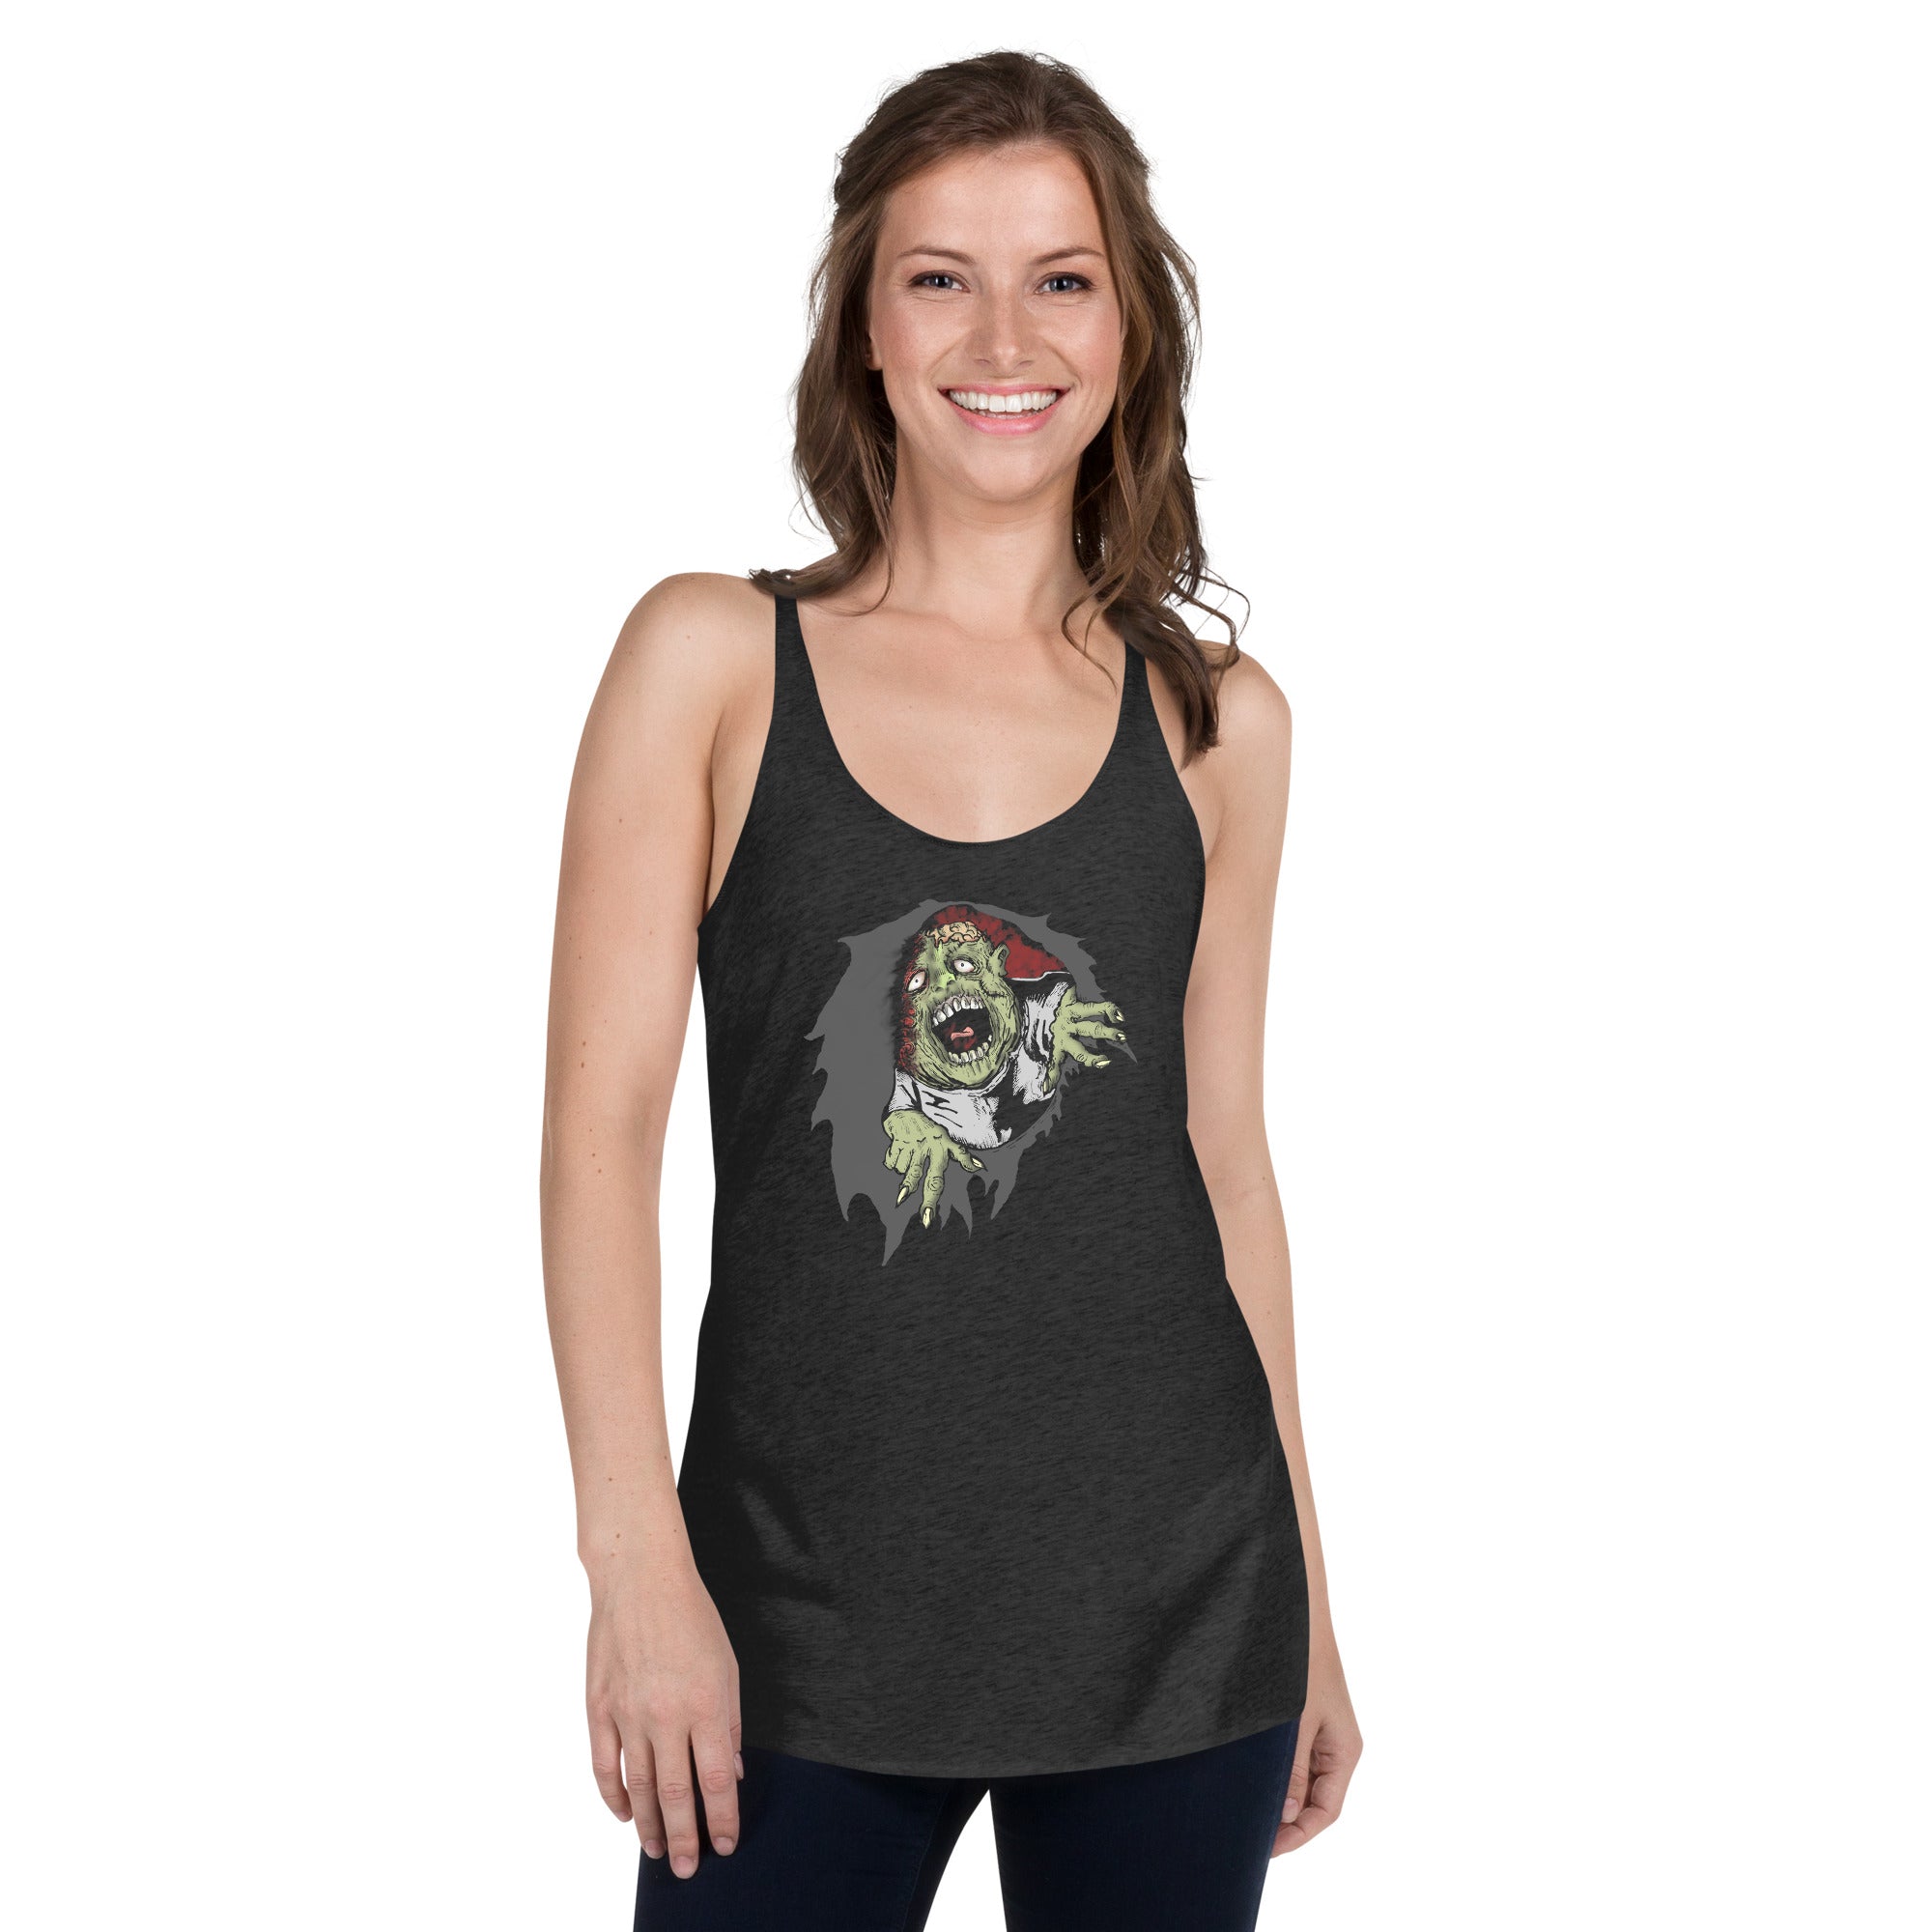 Flesh Eating Zombie Ripping Through Chest Horror Women's Racerback Tank Top Shirt - Edge of Life Designs